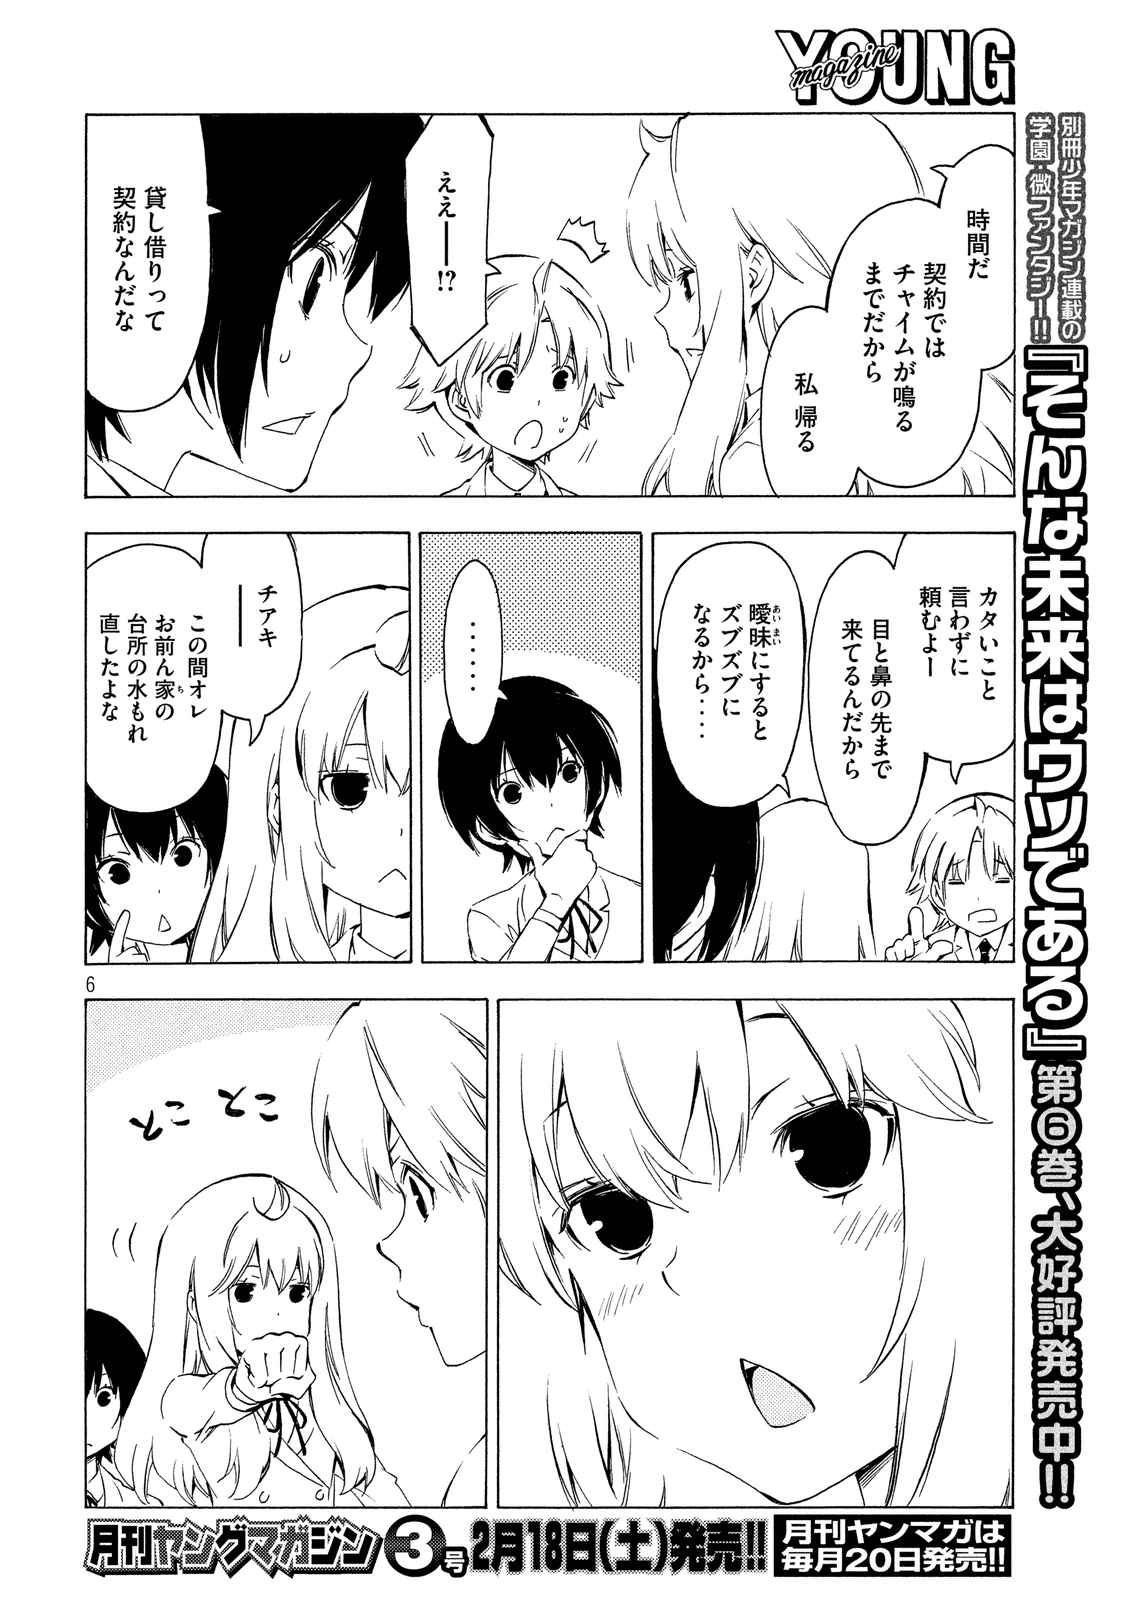 Minami-ke - Chapter 310 - Page 6